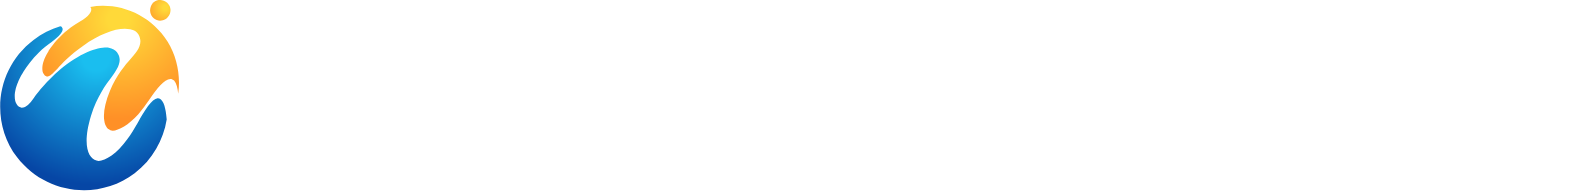 World Holdings logo large for dark backgrounds (transparent PNG)